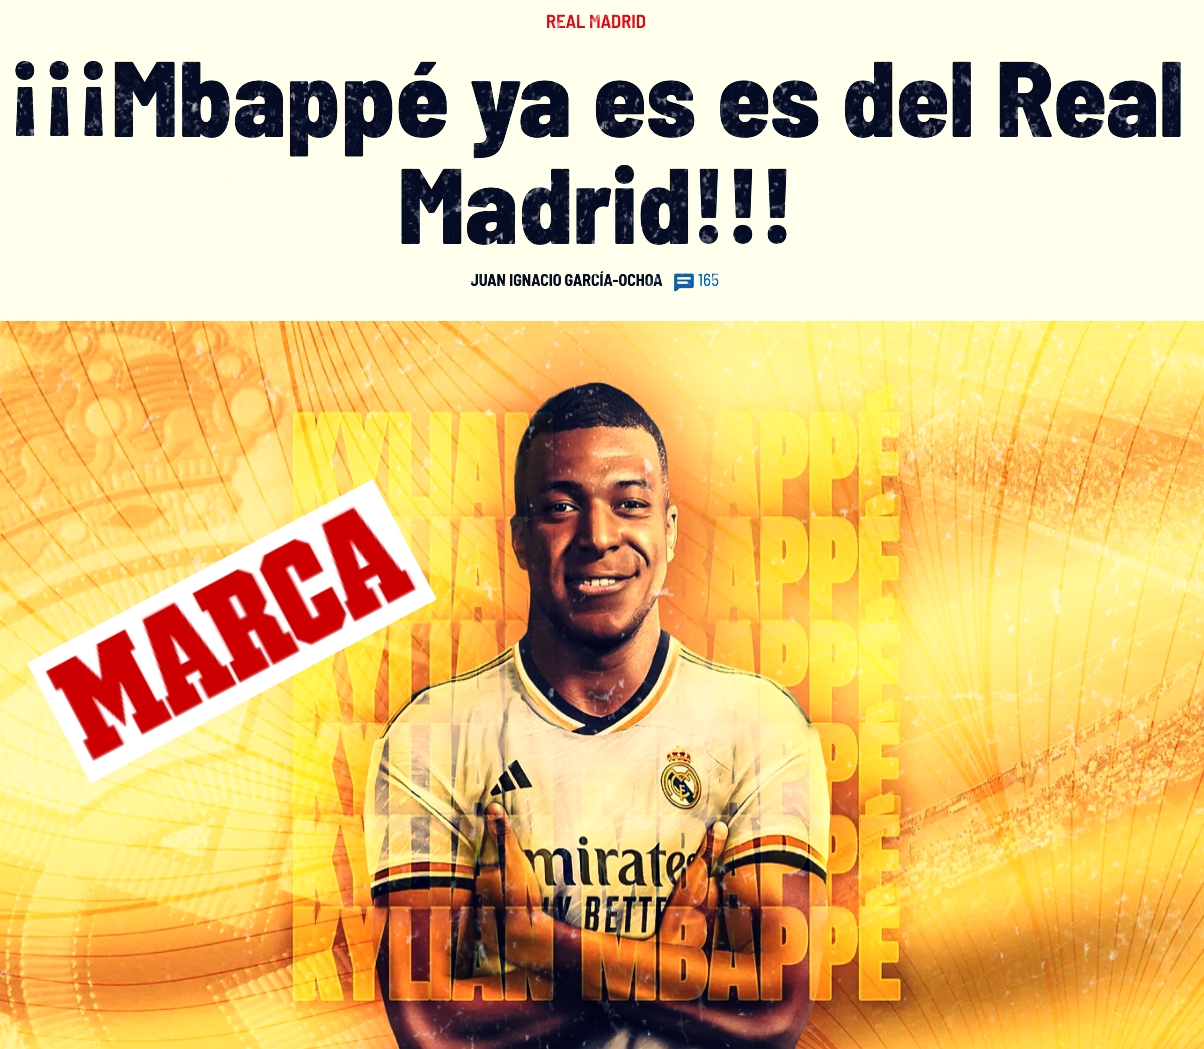 Mbappé aò Real Madrid fino al 2029